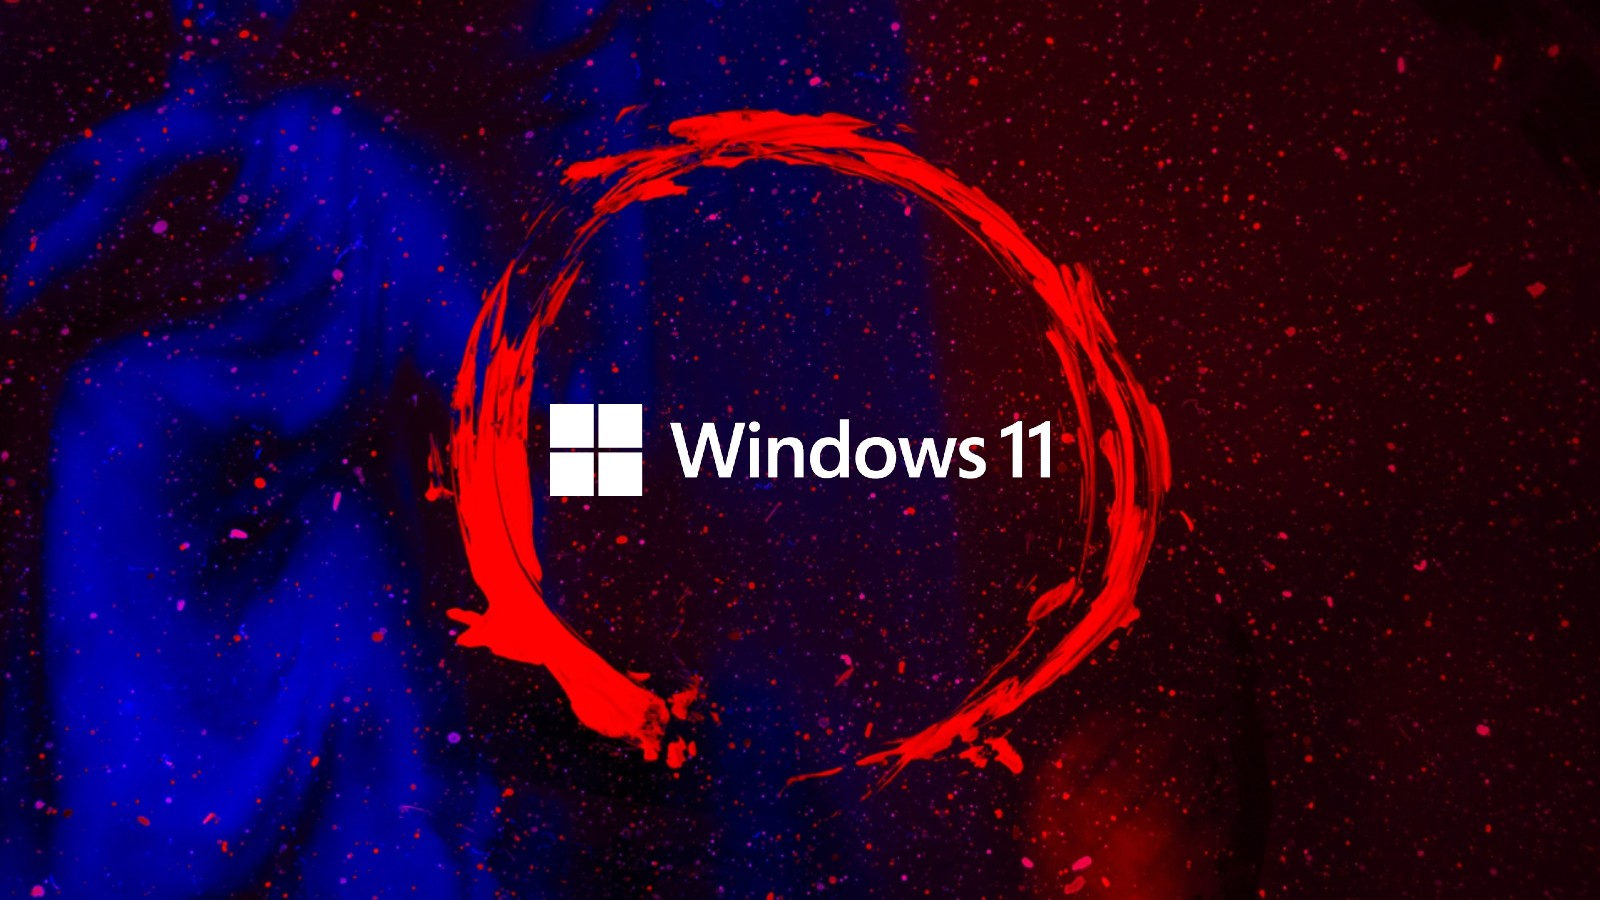 Unofficial Windows 11 upgrade installs info-stealing malware